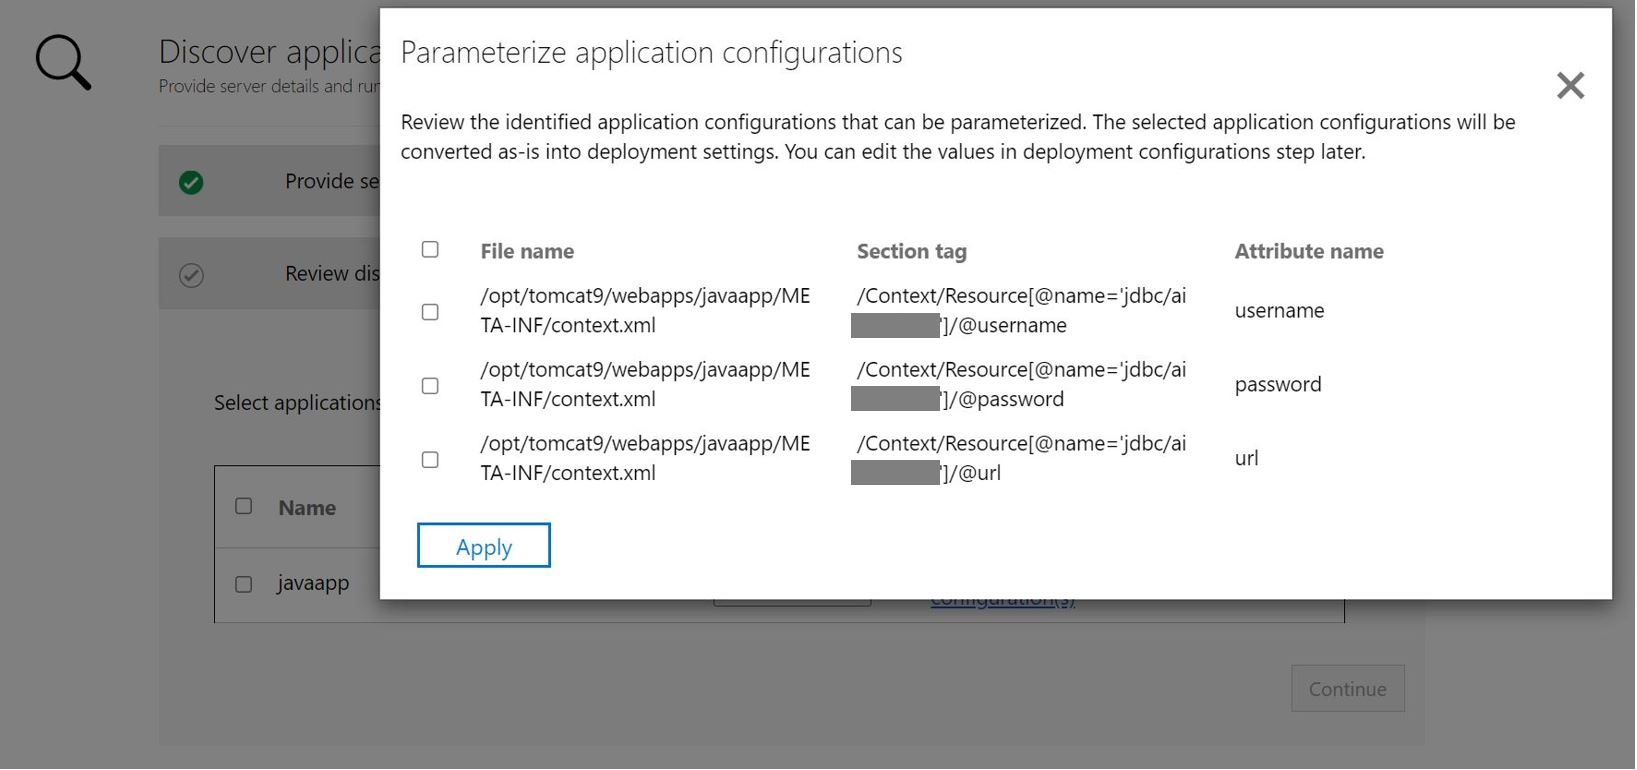 Снимок экрана: параметризация конфигураций приложения ASP.NET.